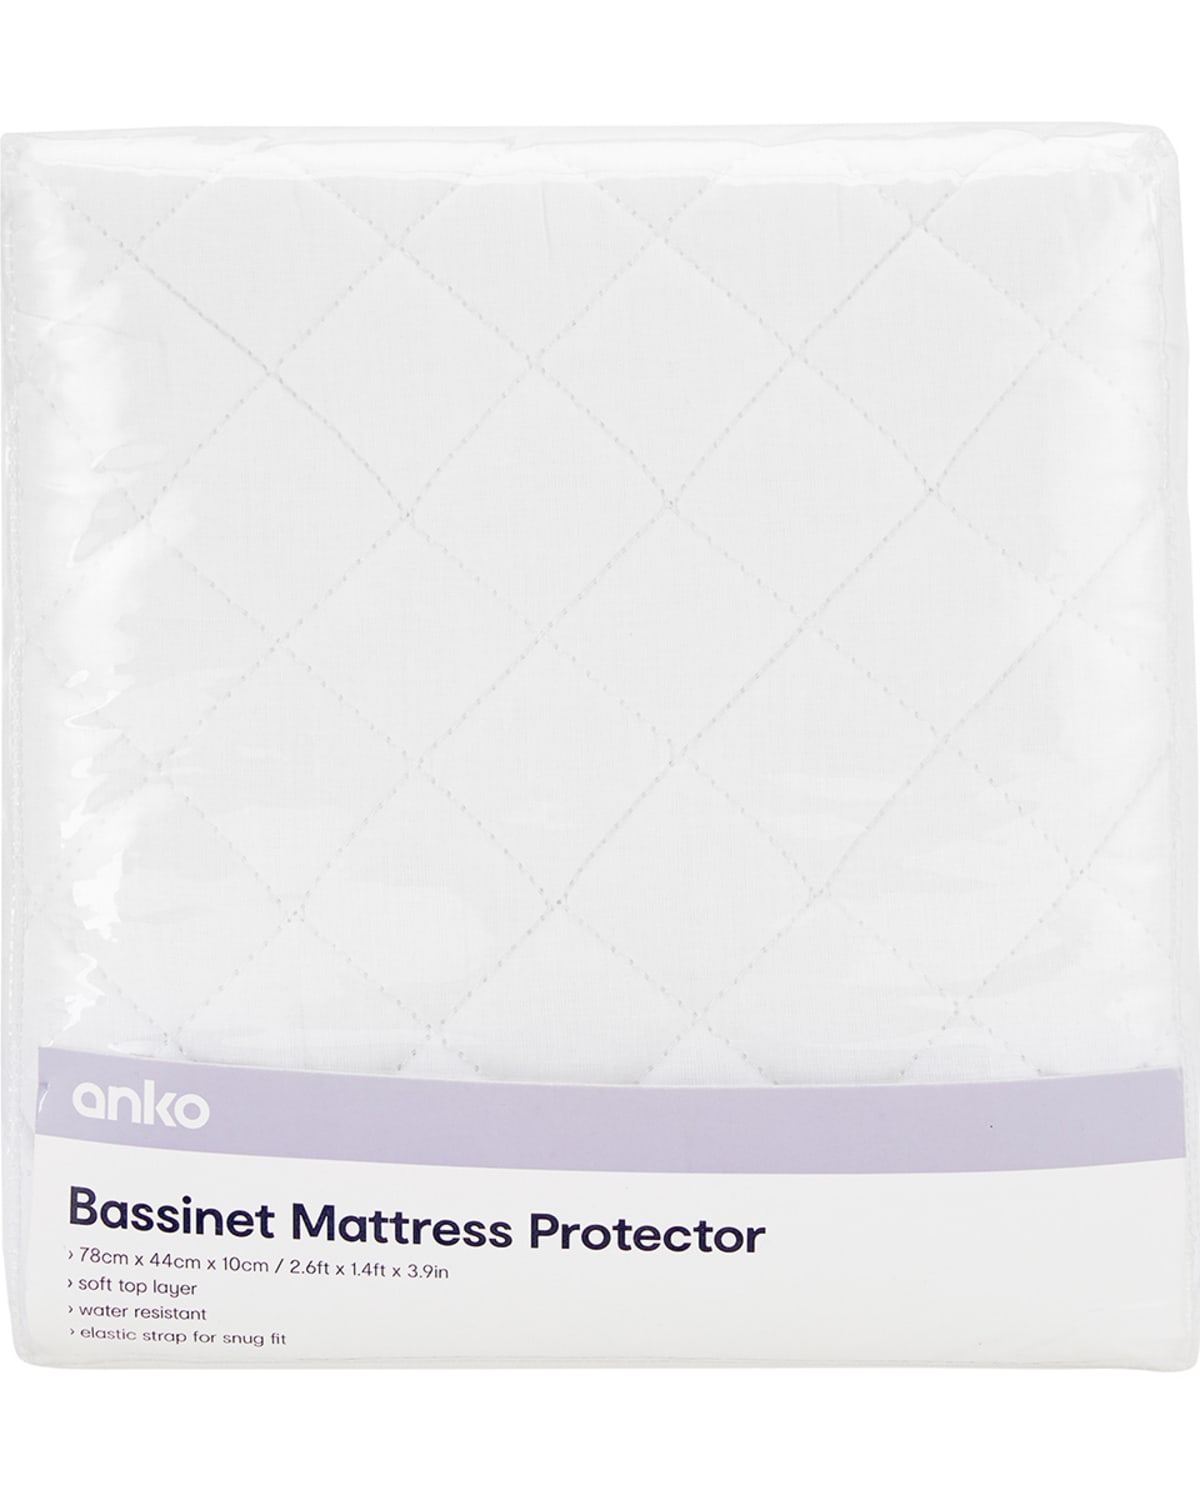 Bassinet Mattress Protector